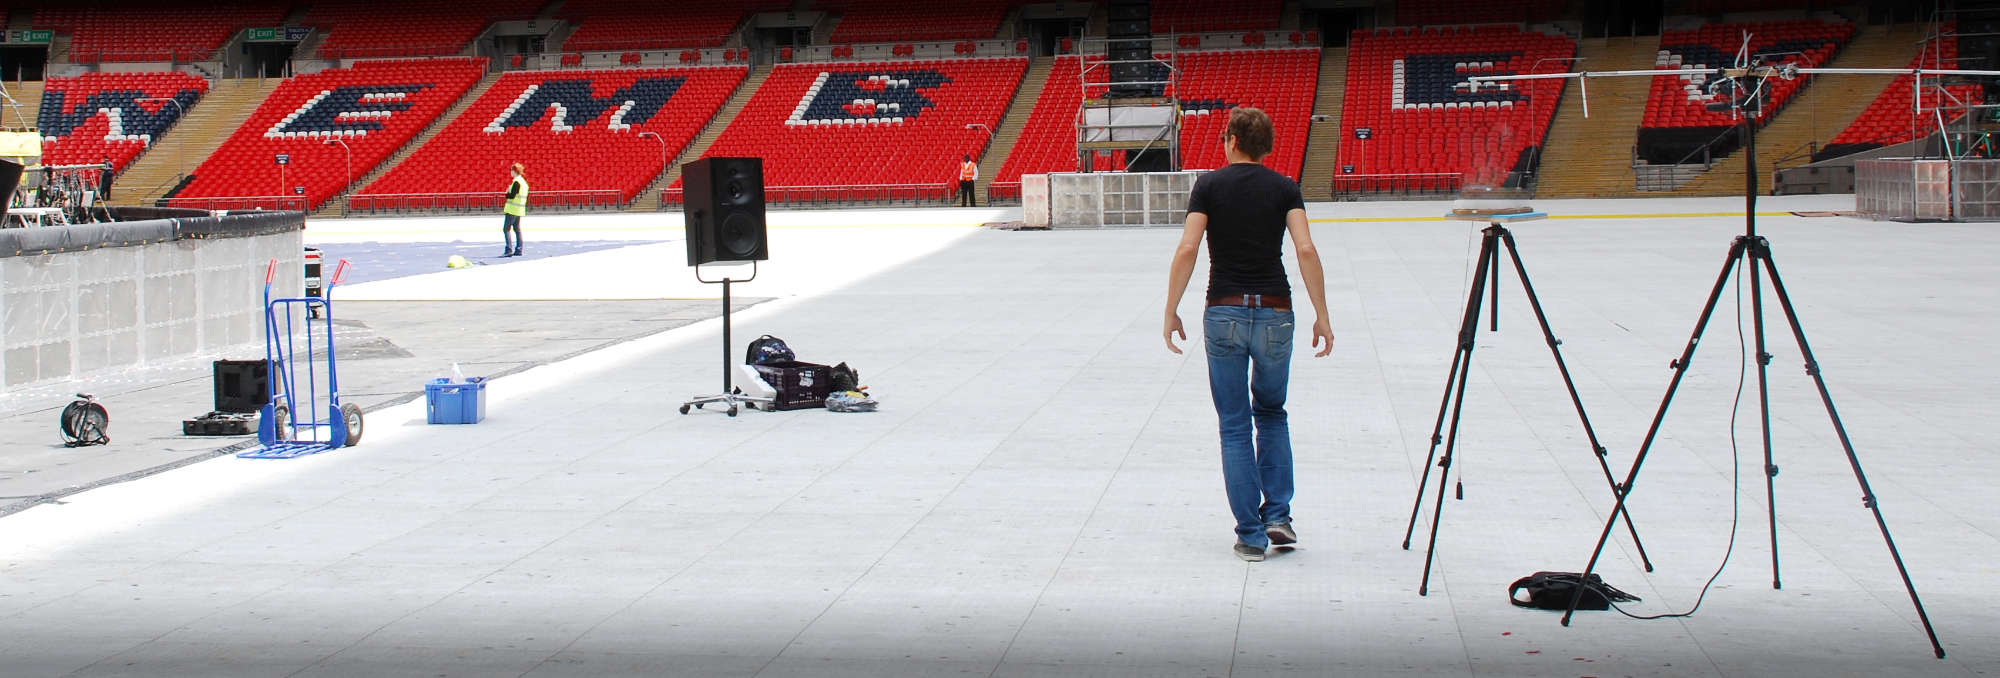 recording at Wembley Stadium, London